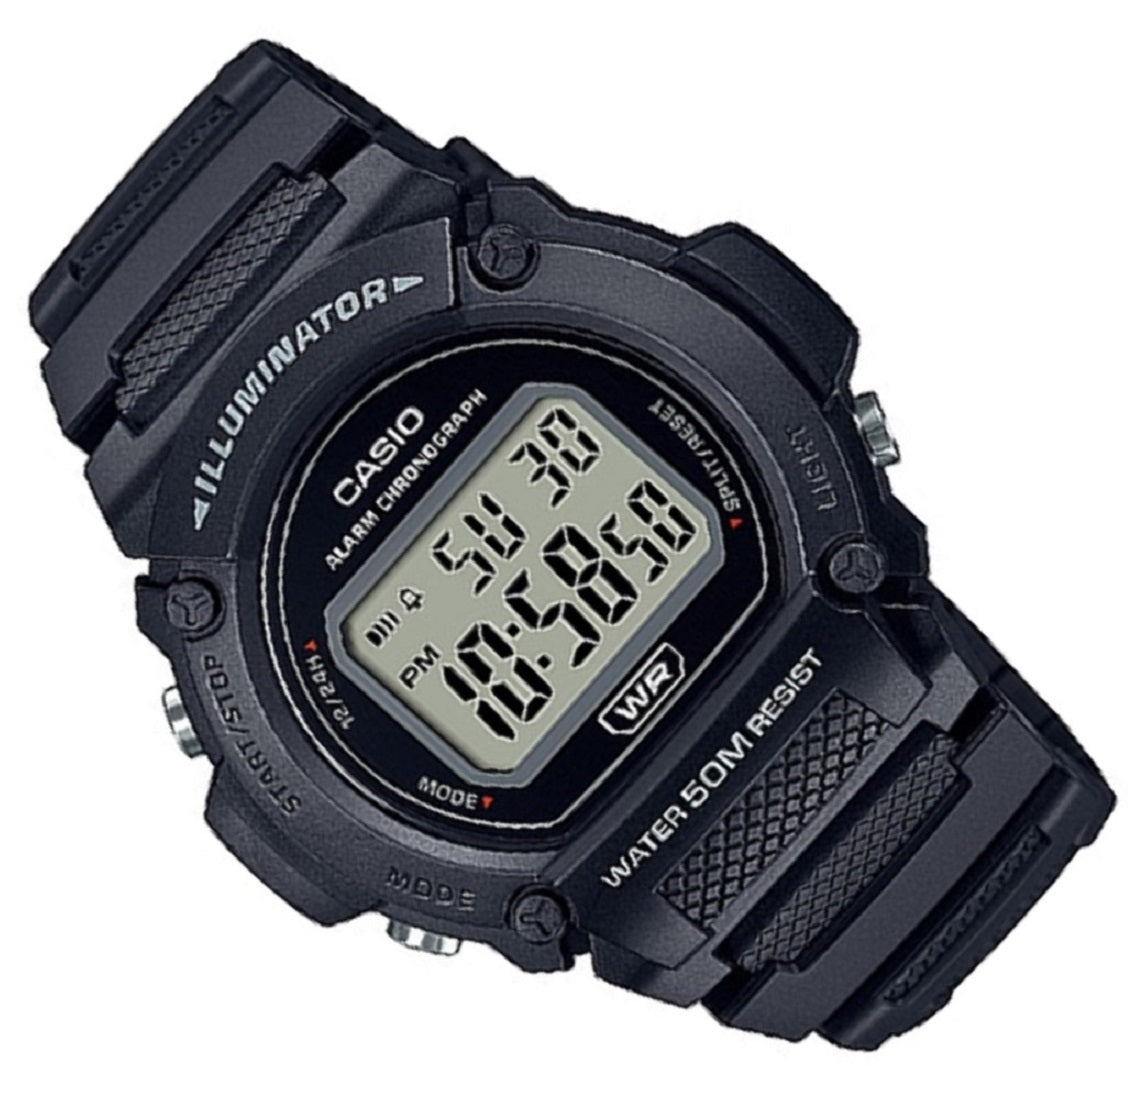 Casio W-219H-1A Black Resin Strap Watch for Men-Watch Portal Philippines